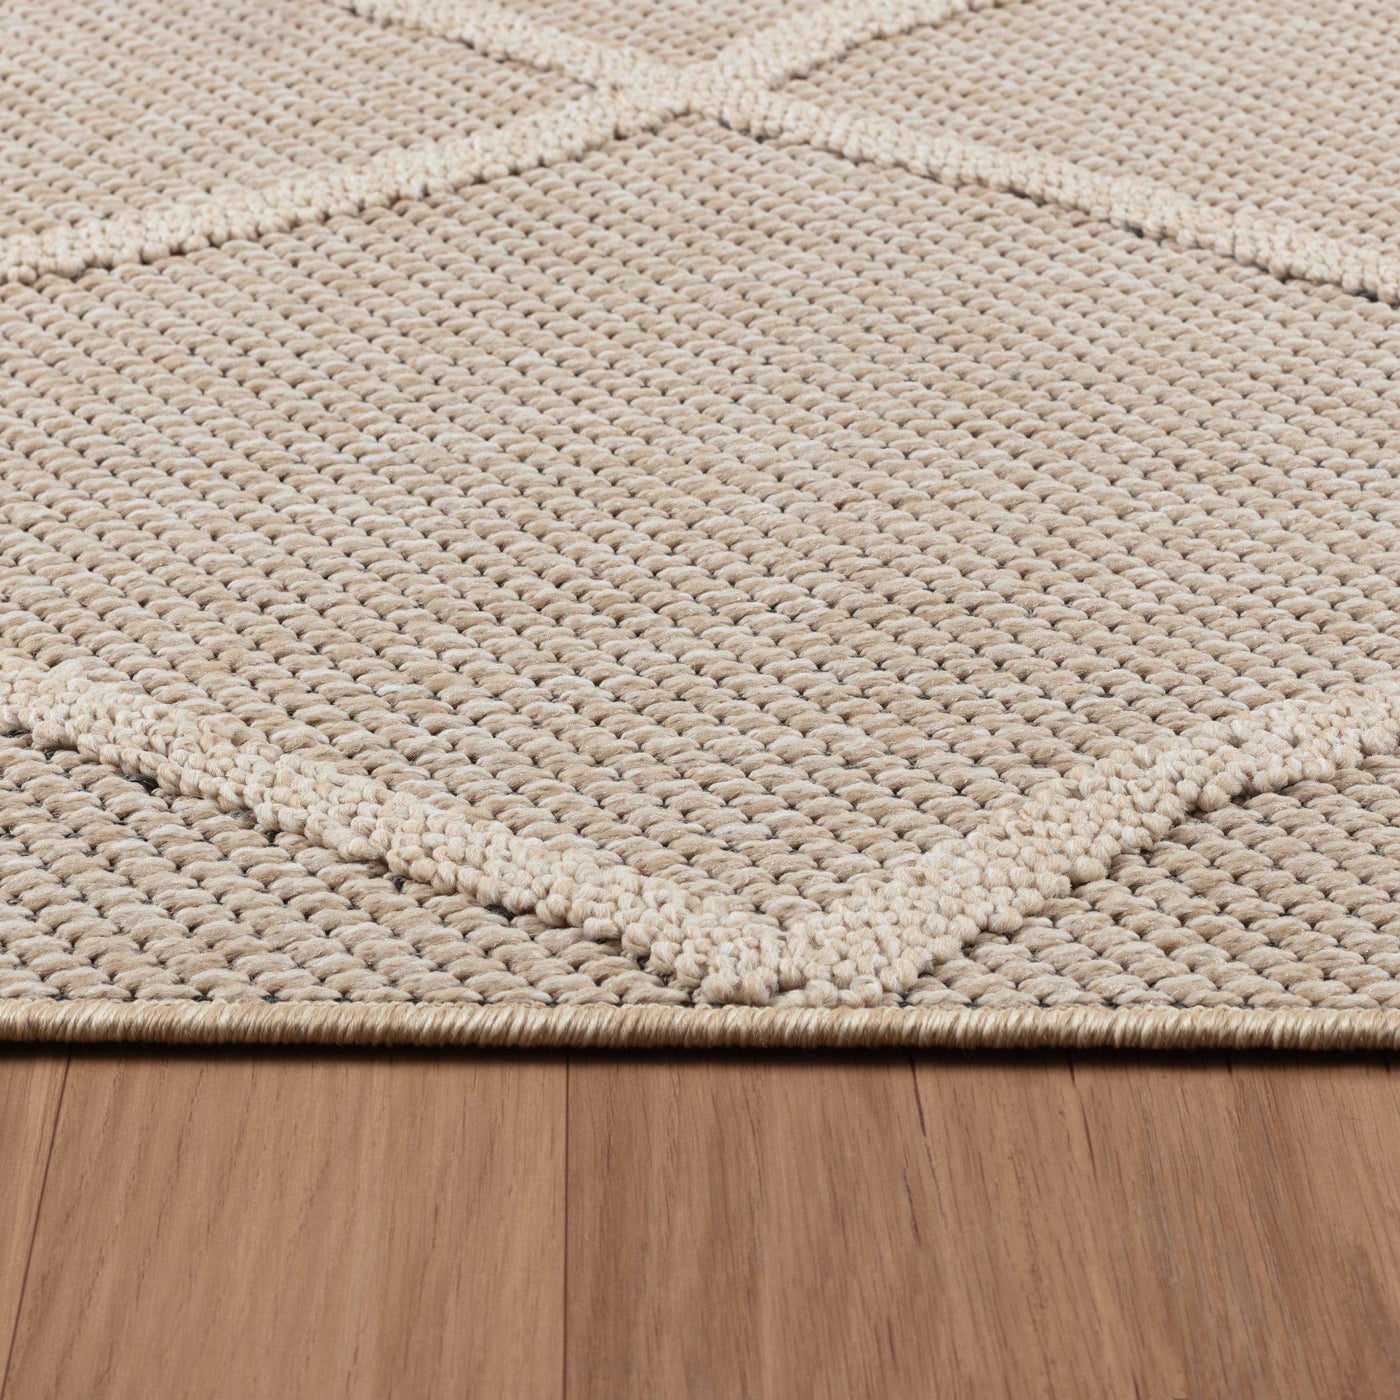 Teppich Rauten Beige|SIMRUG.DE Flachgewebe In- Muster – Einfarbig Outdoor Skandinavisch Boho